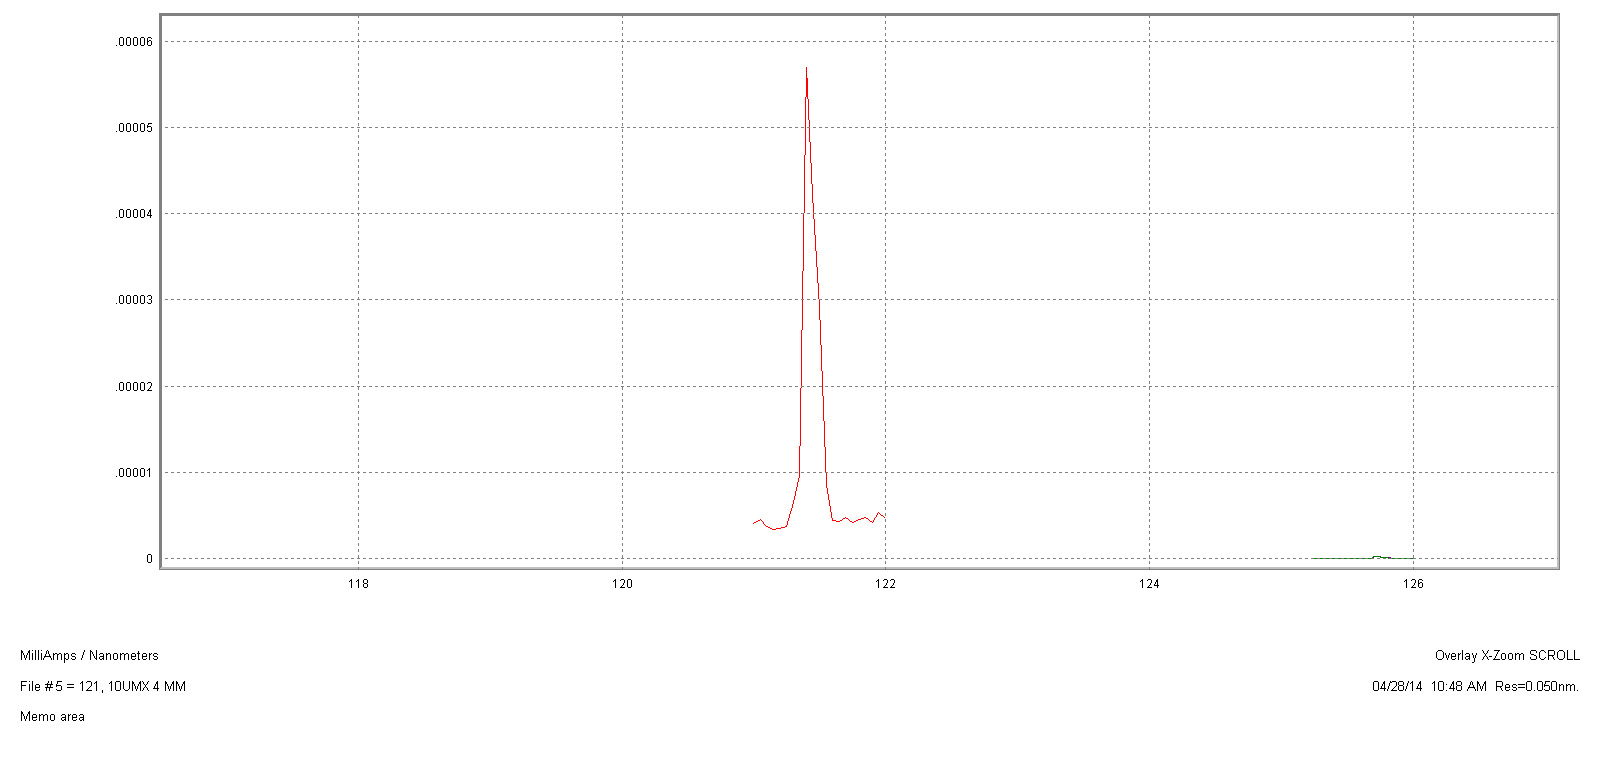 lyman-alpha emission line from deuterium lamp, low resolution